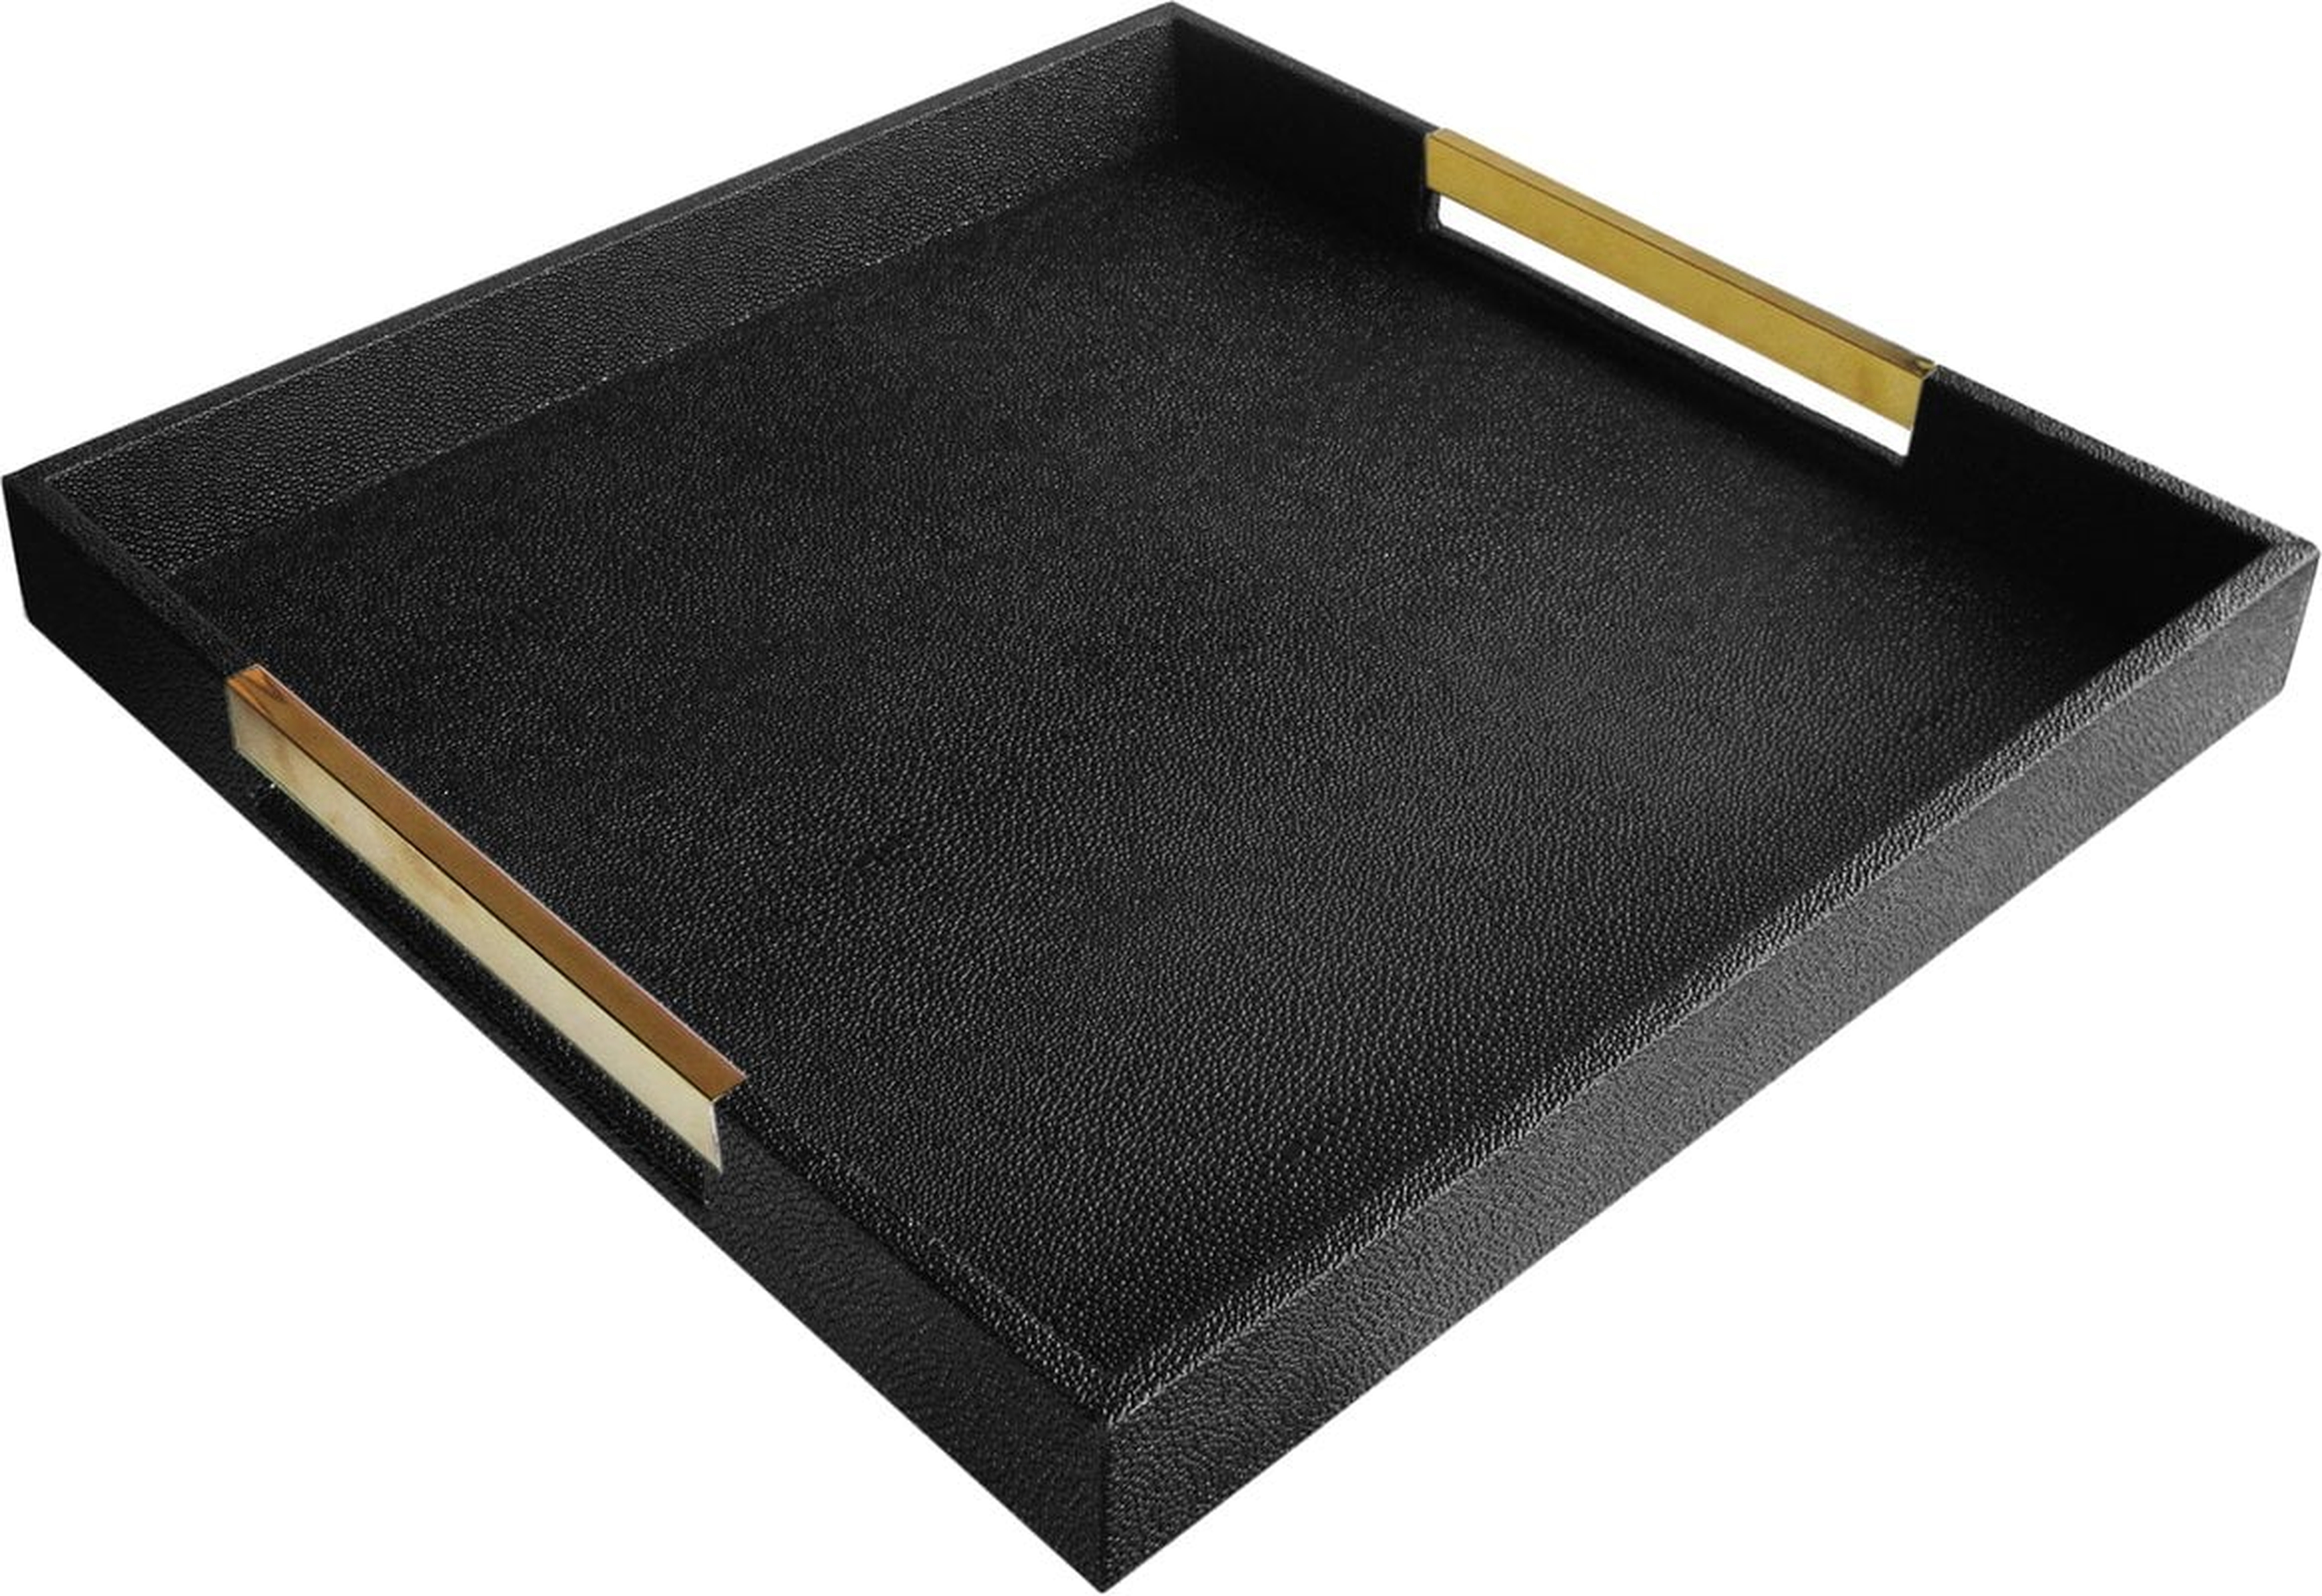 Beck Ottoman/Coffee Table Tray - Black, Gold Handles - AllModern